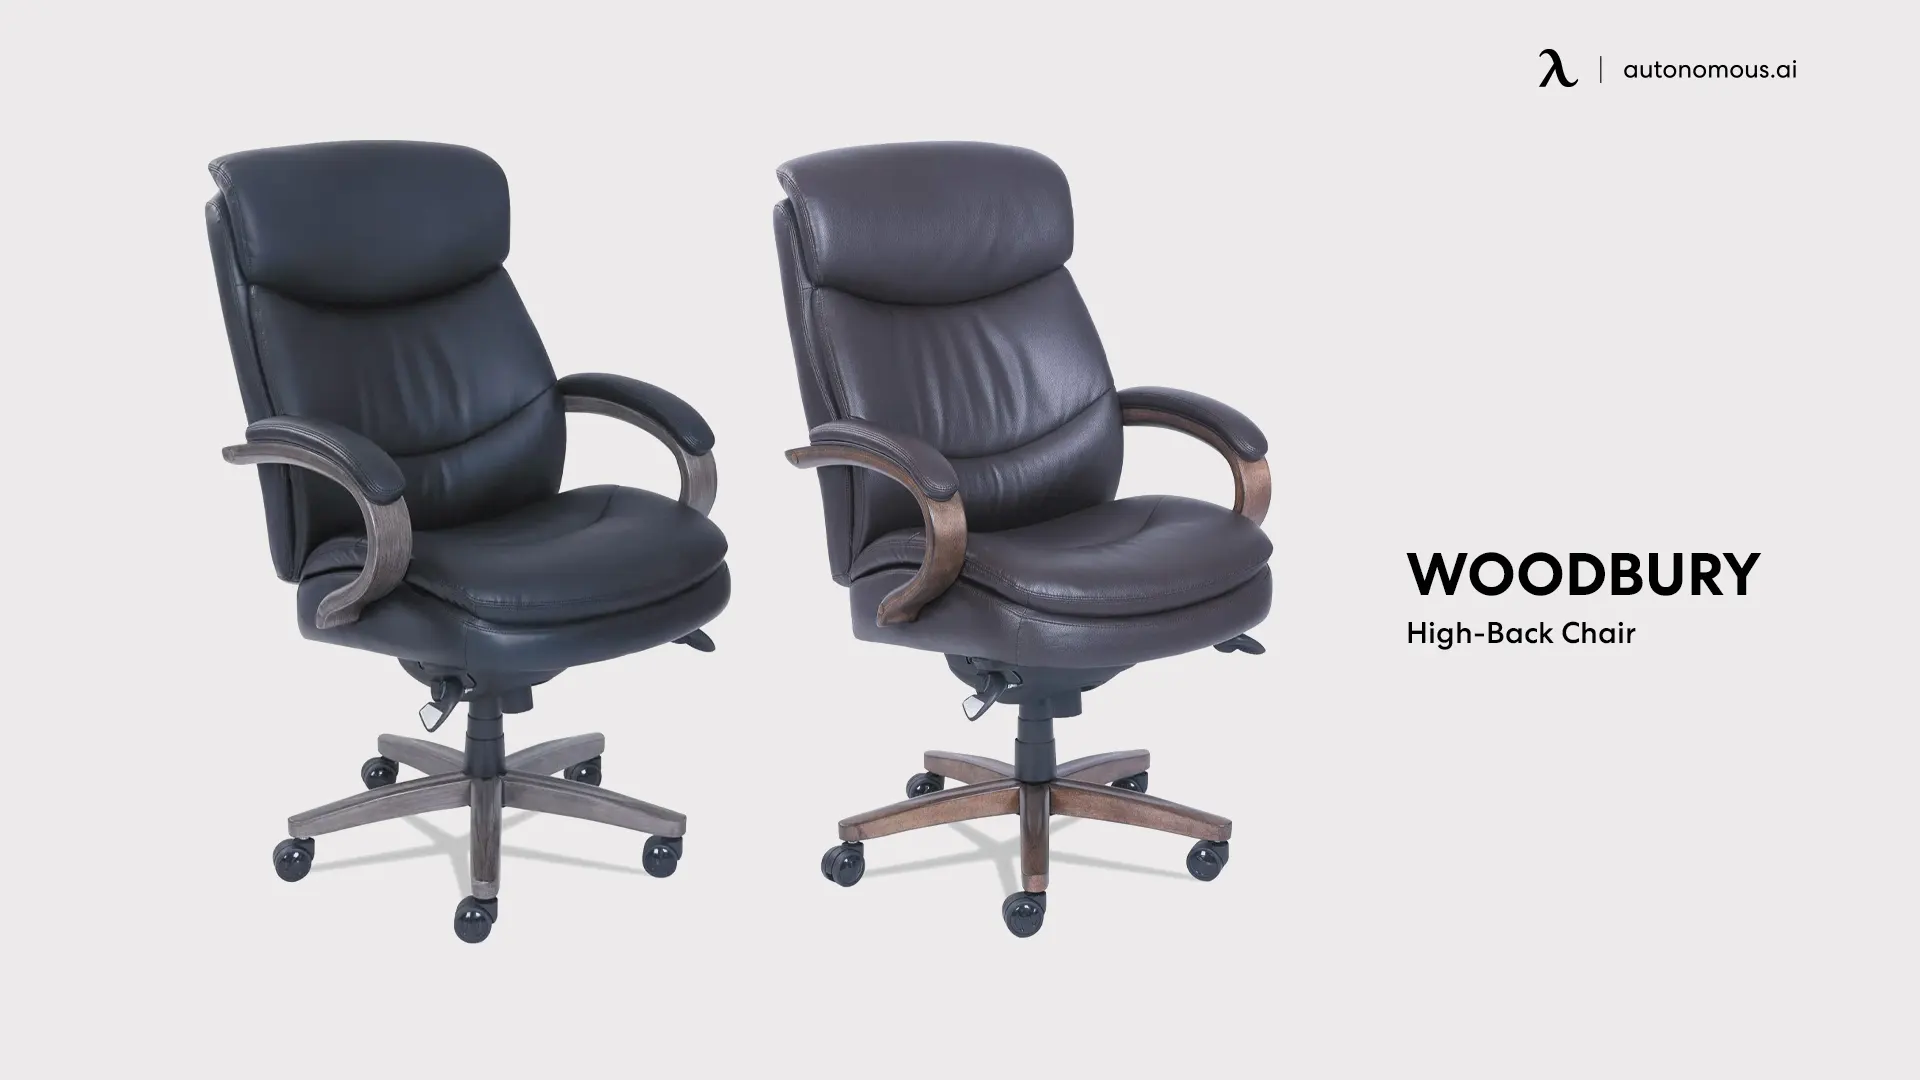 Woodbury High-Back Chair - Bariatric office chair